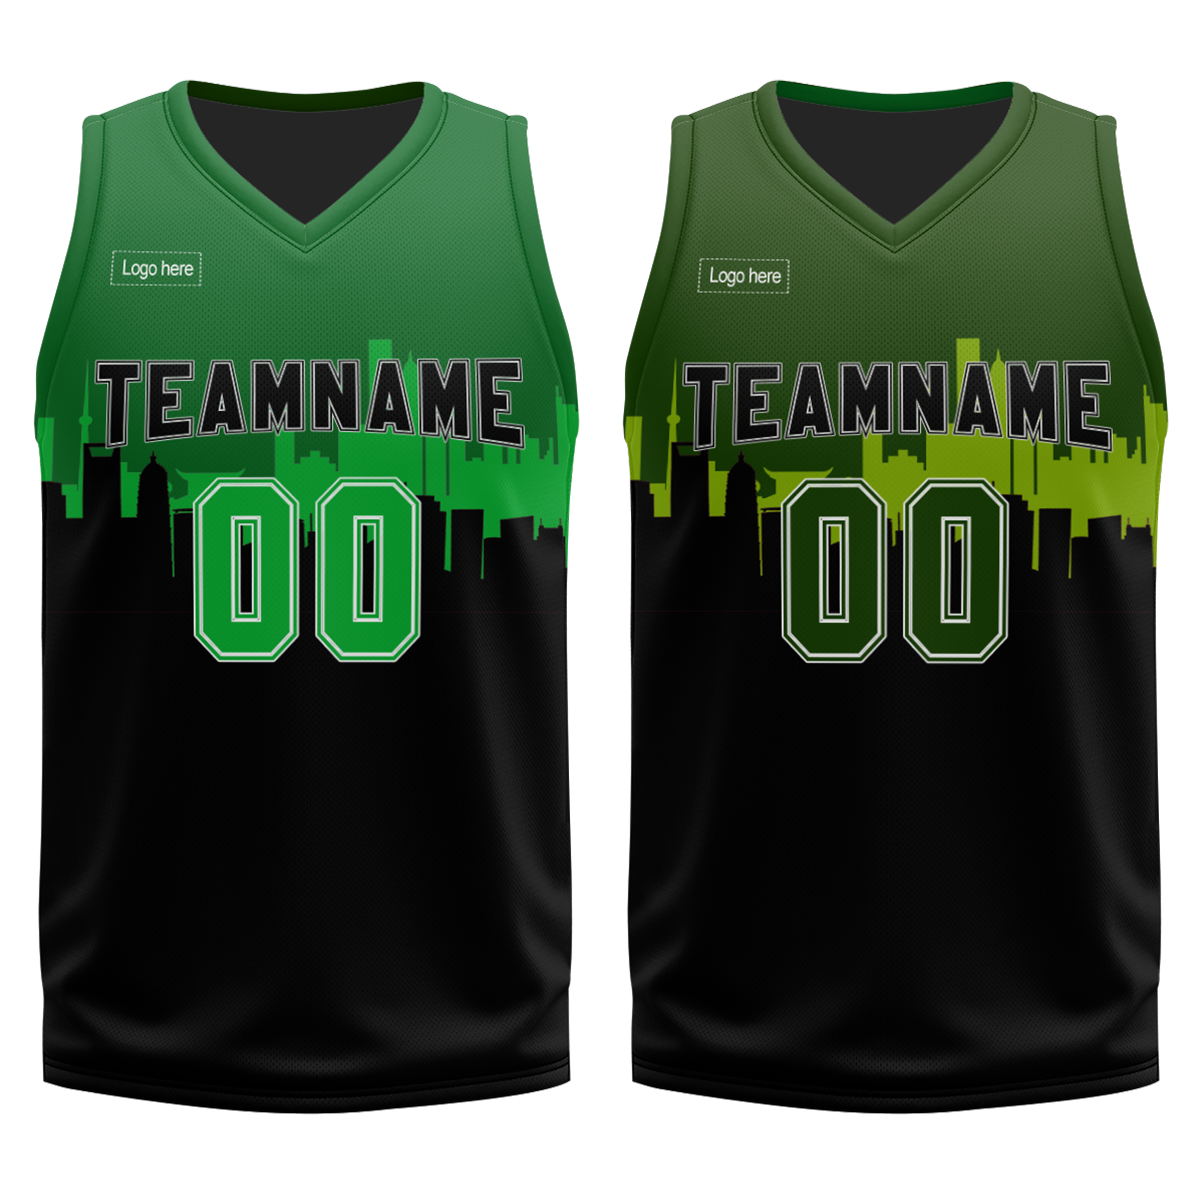 wholesale-custom-breathable-sublimation-printing-reversible-blank-design-uniform-unisex-basketball-jersey-at-cj-pod-4